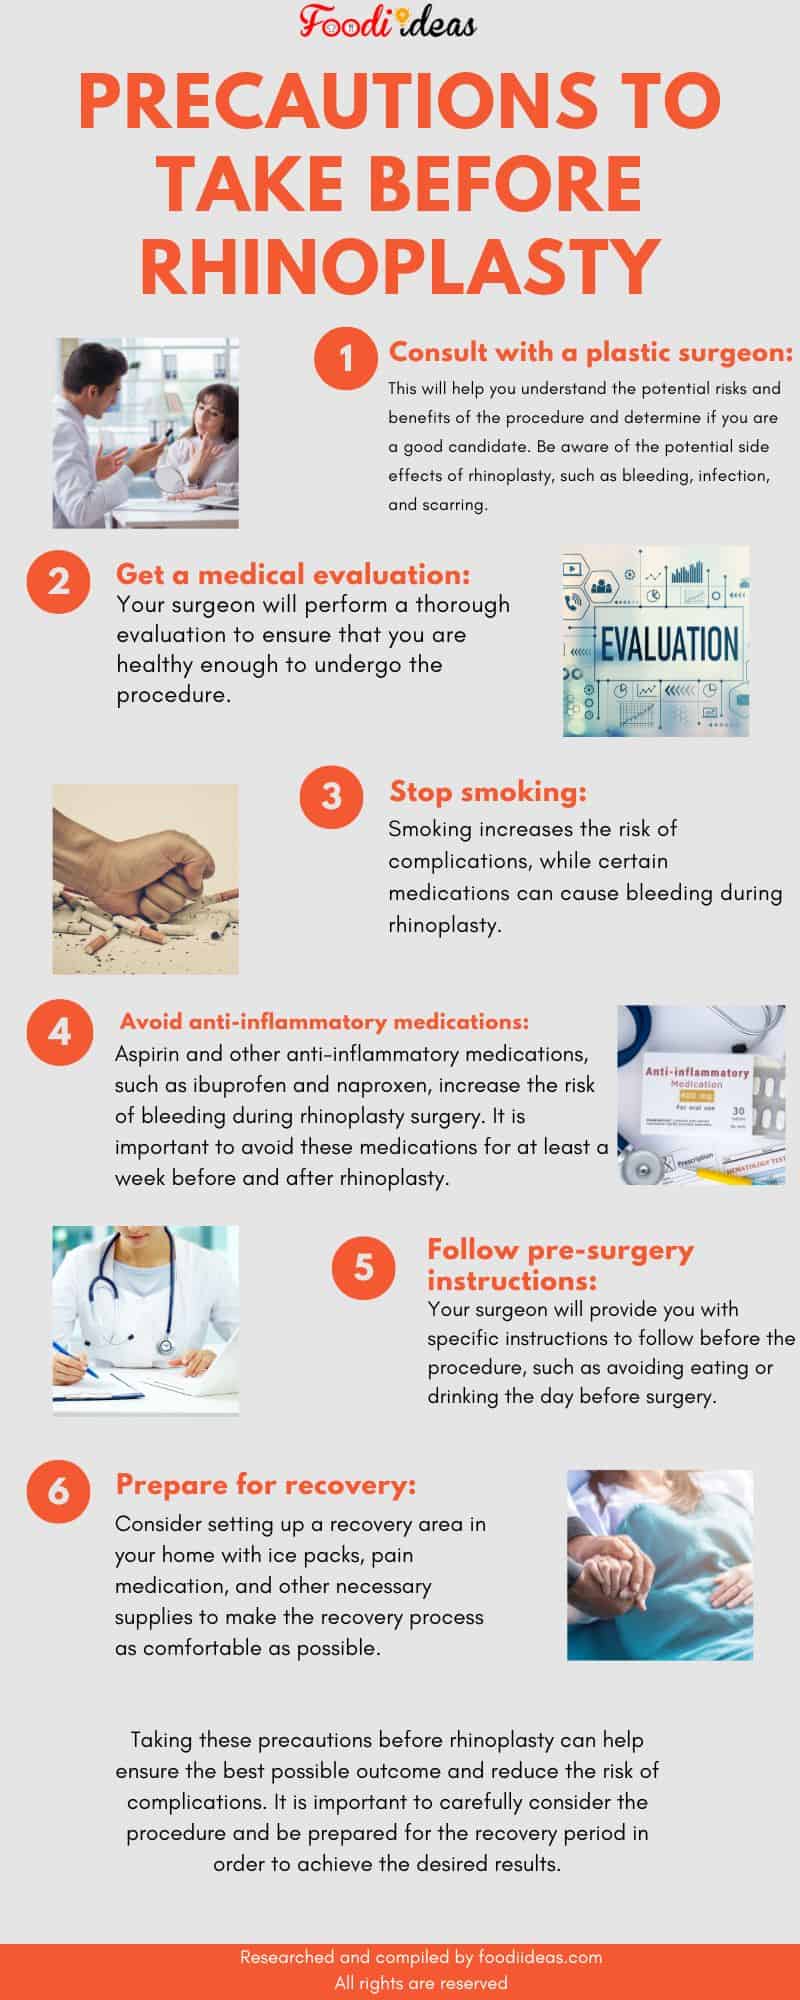 6 Precautions to Take before Rhinoplasty